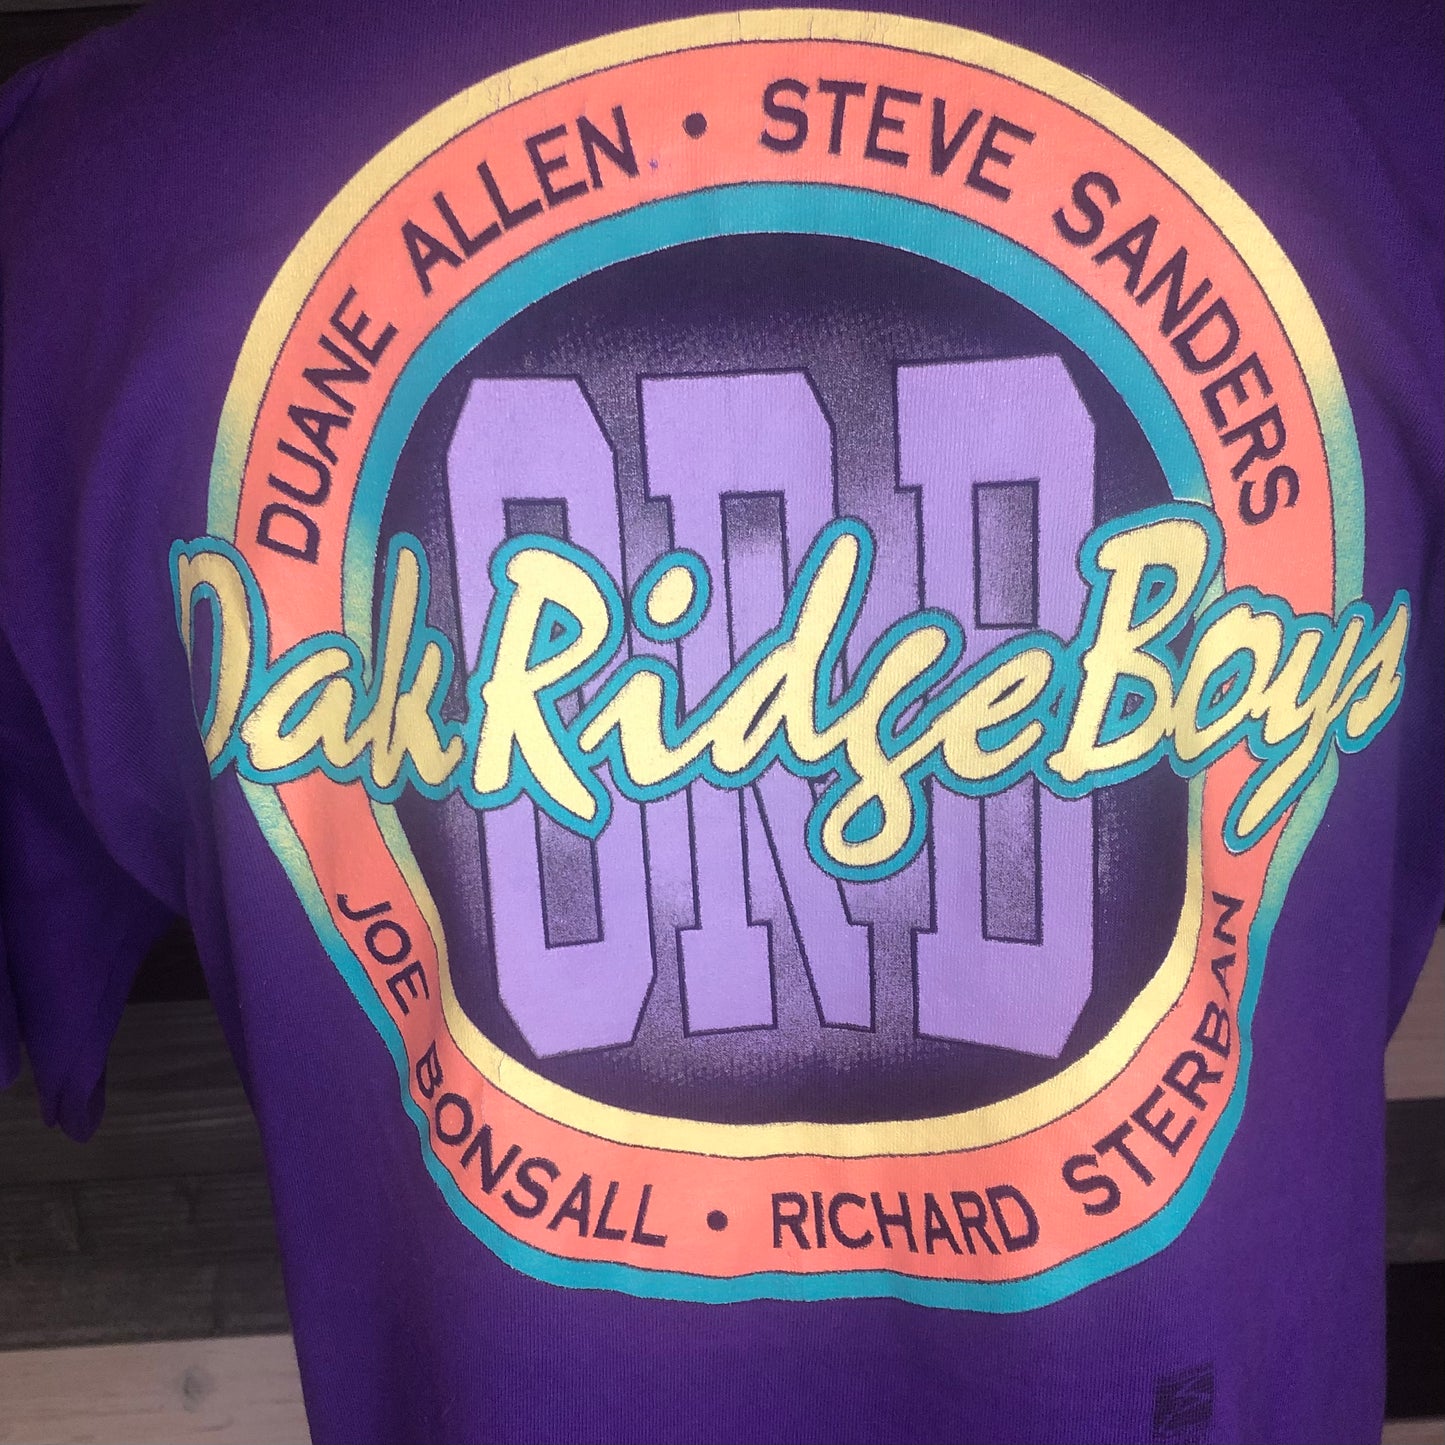 1993 Vintage Western Oak Ridge Boys Country Concert T-Shirt